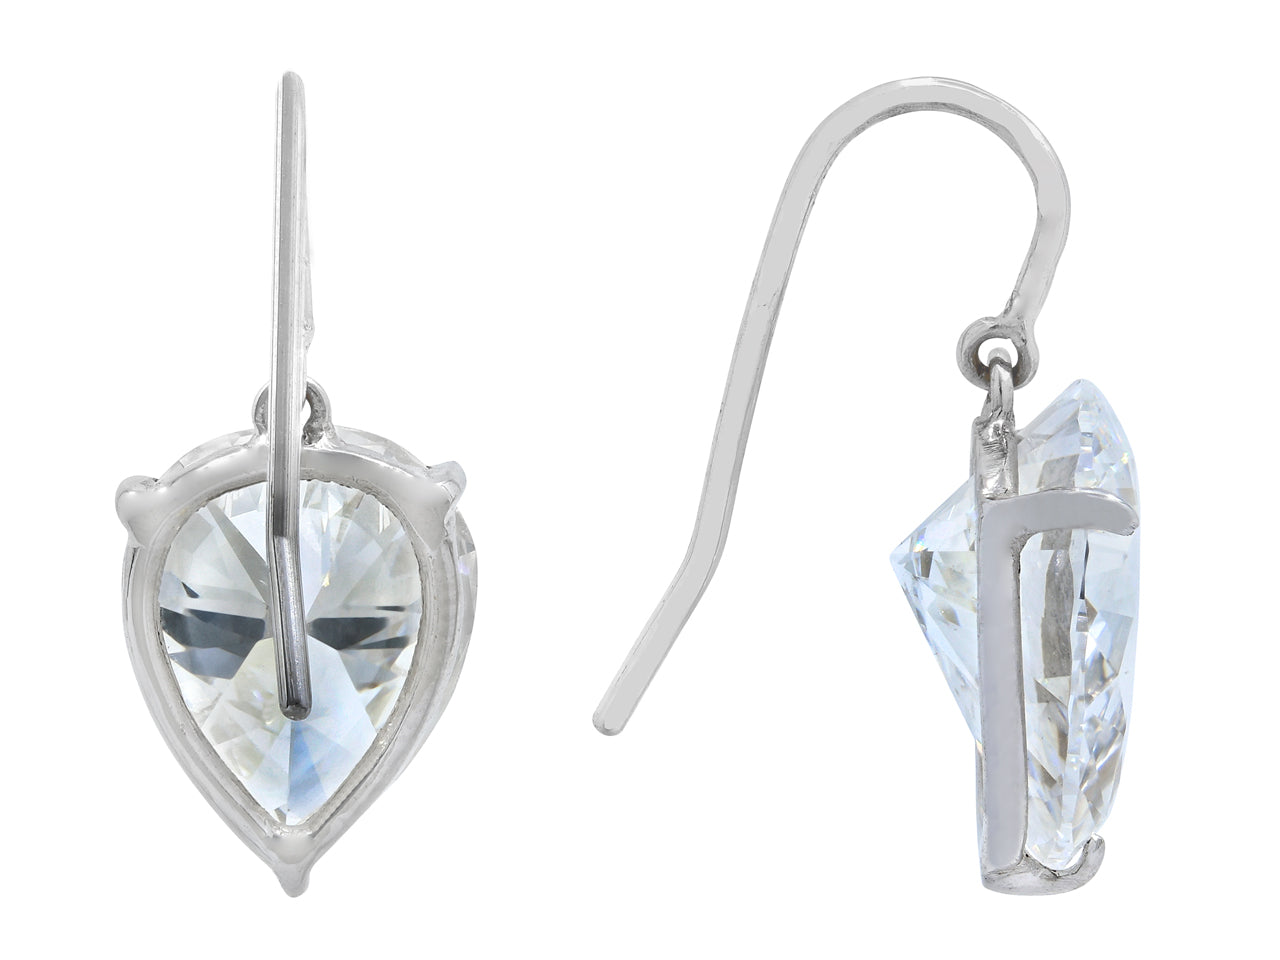 Beladora 'Bespoke' Pear-shape Diamond Drop Earrings, 6.52 carats total, in Platinum